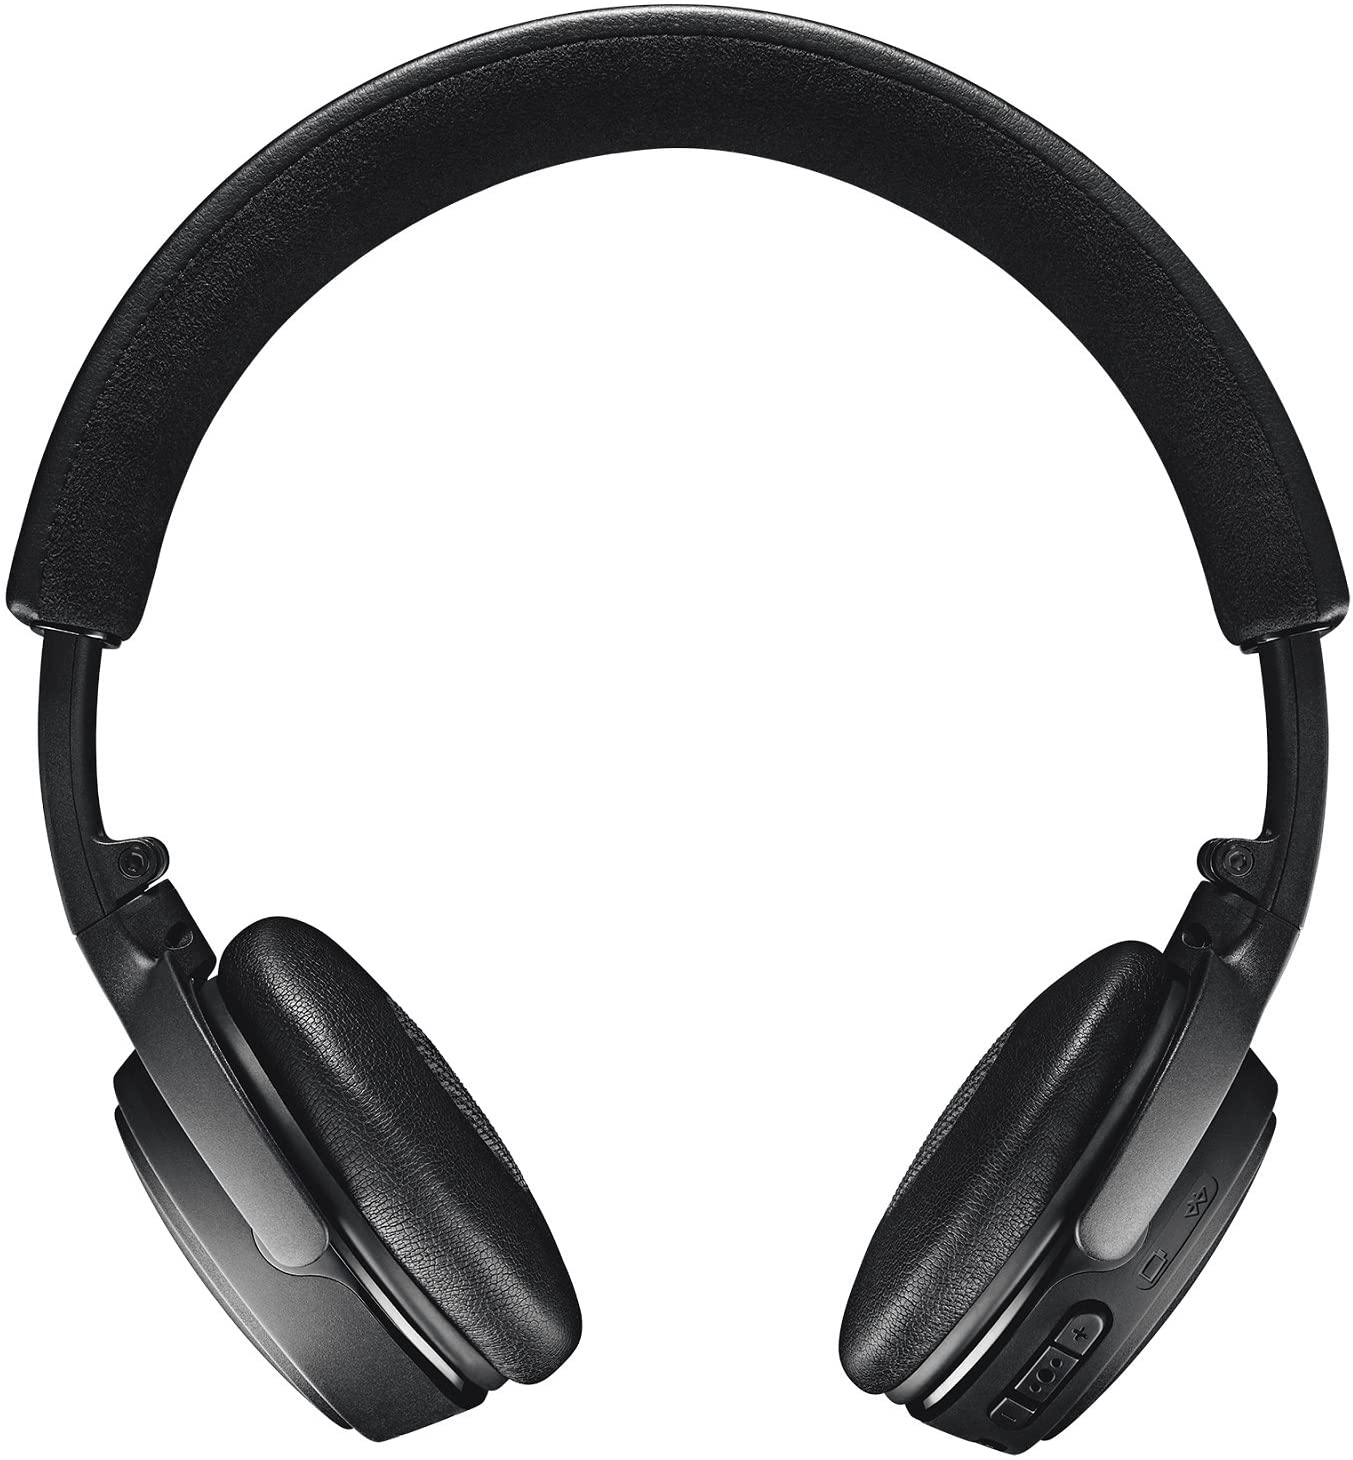 Bose Soundlink Headphones Review